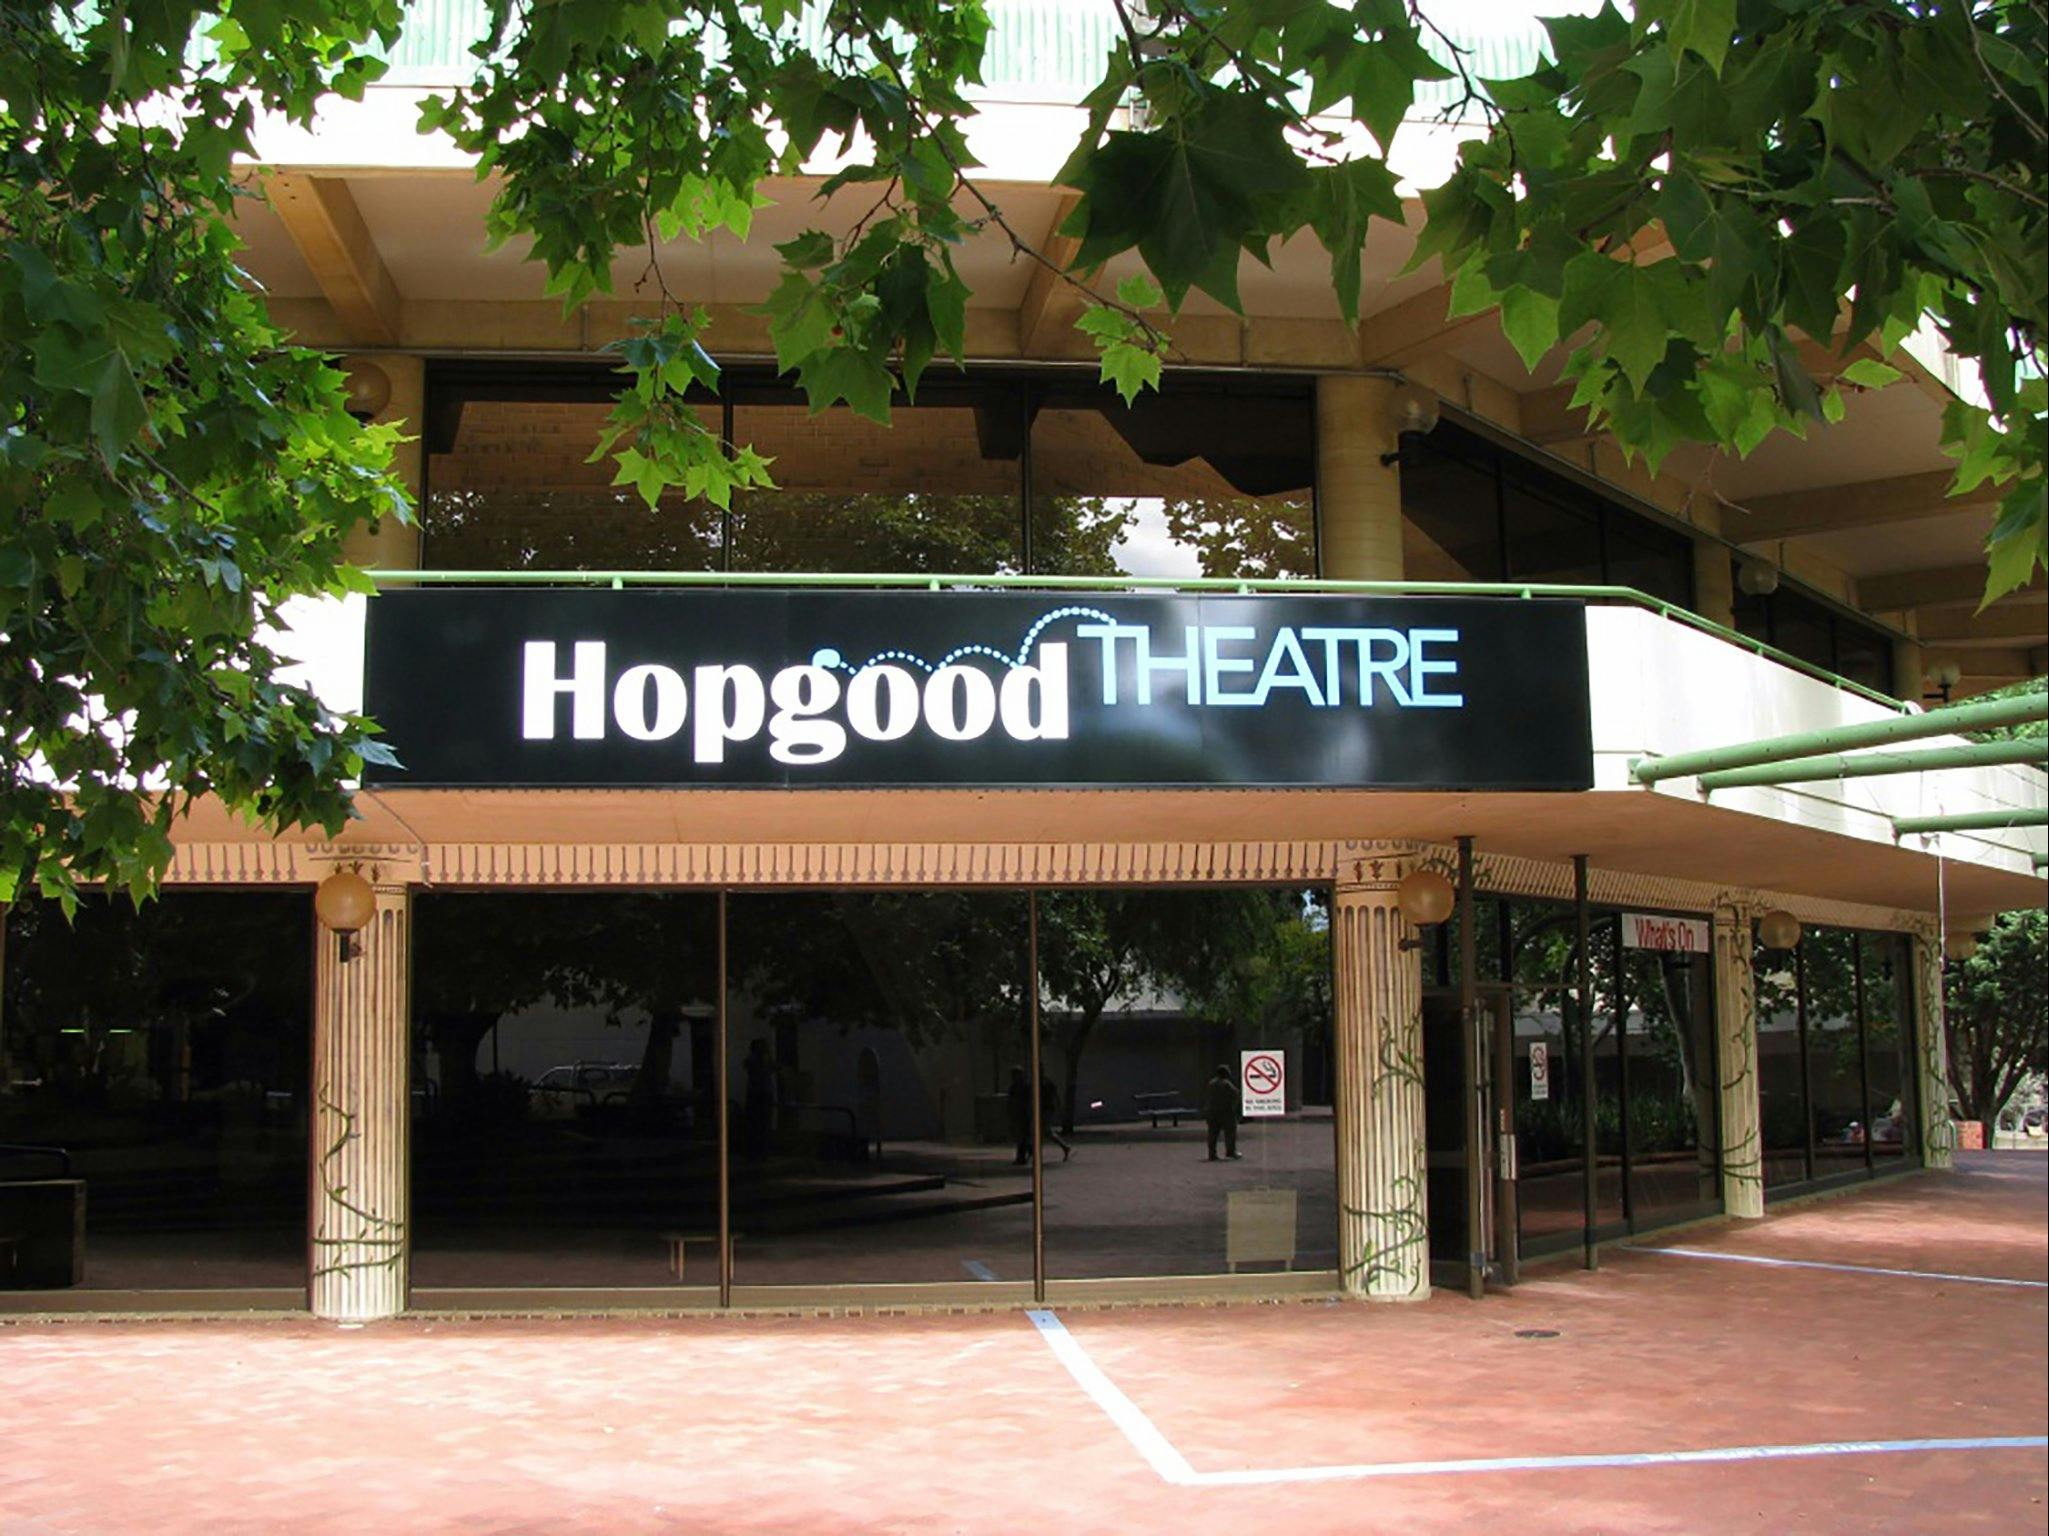 Hopgood Theatre